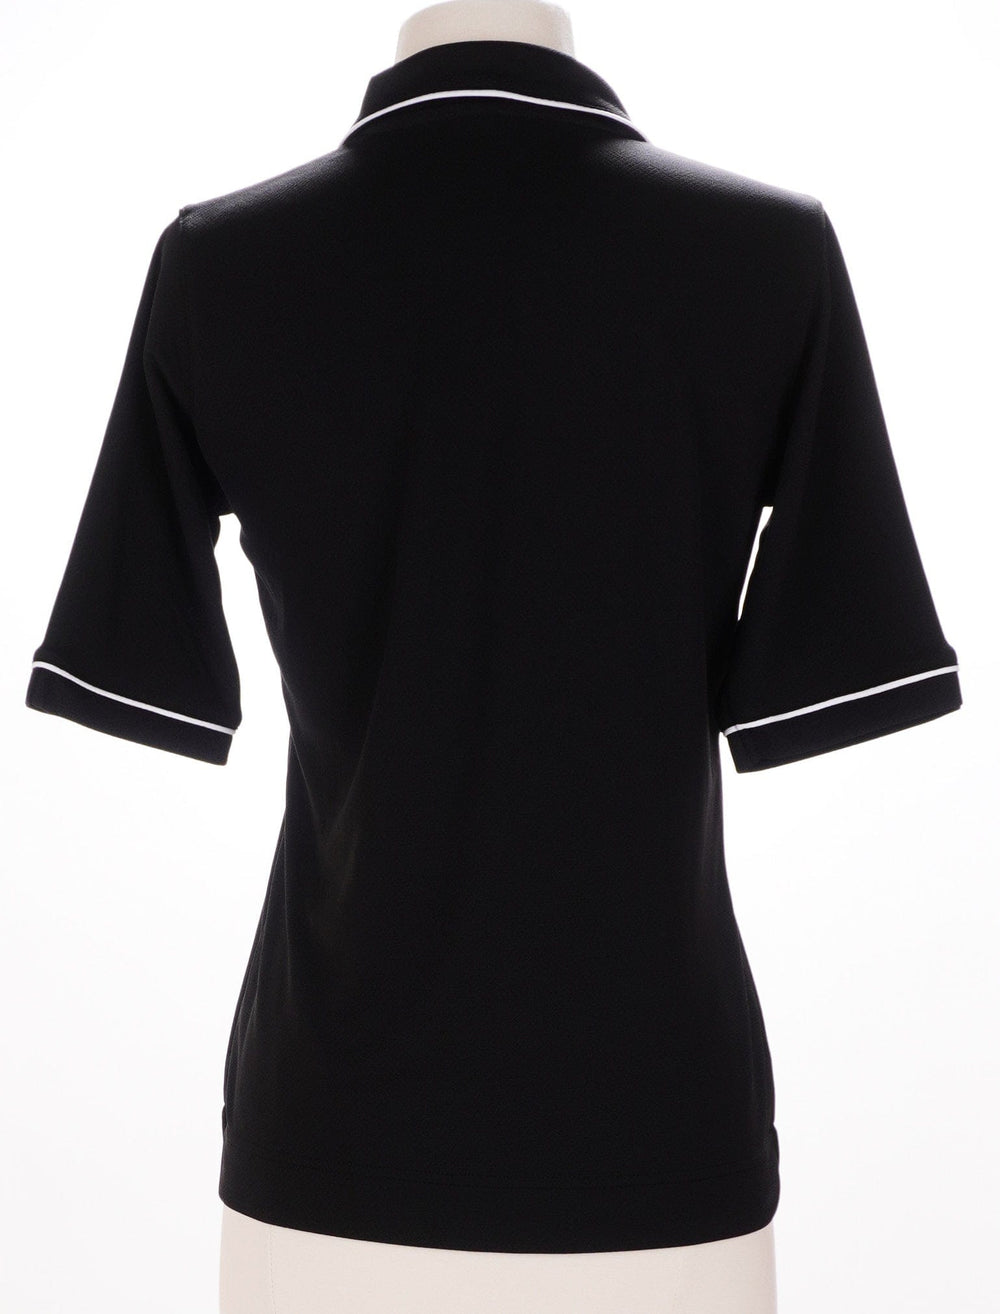 Skorzie Black / Small Tehama Mid Sleeve Golf Shirt - Black - Size Small